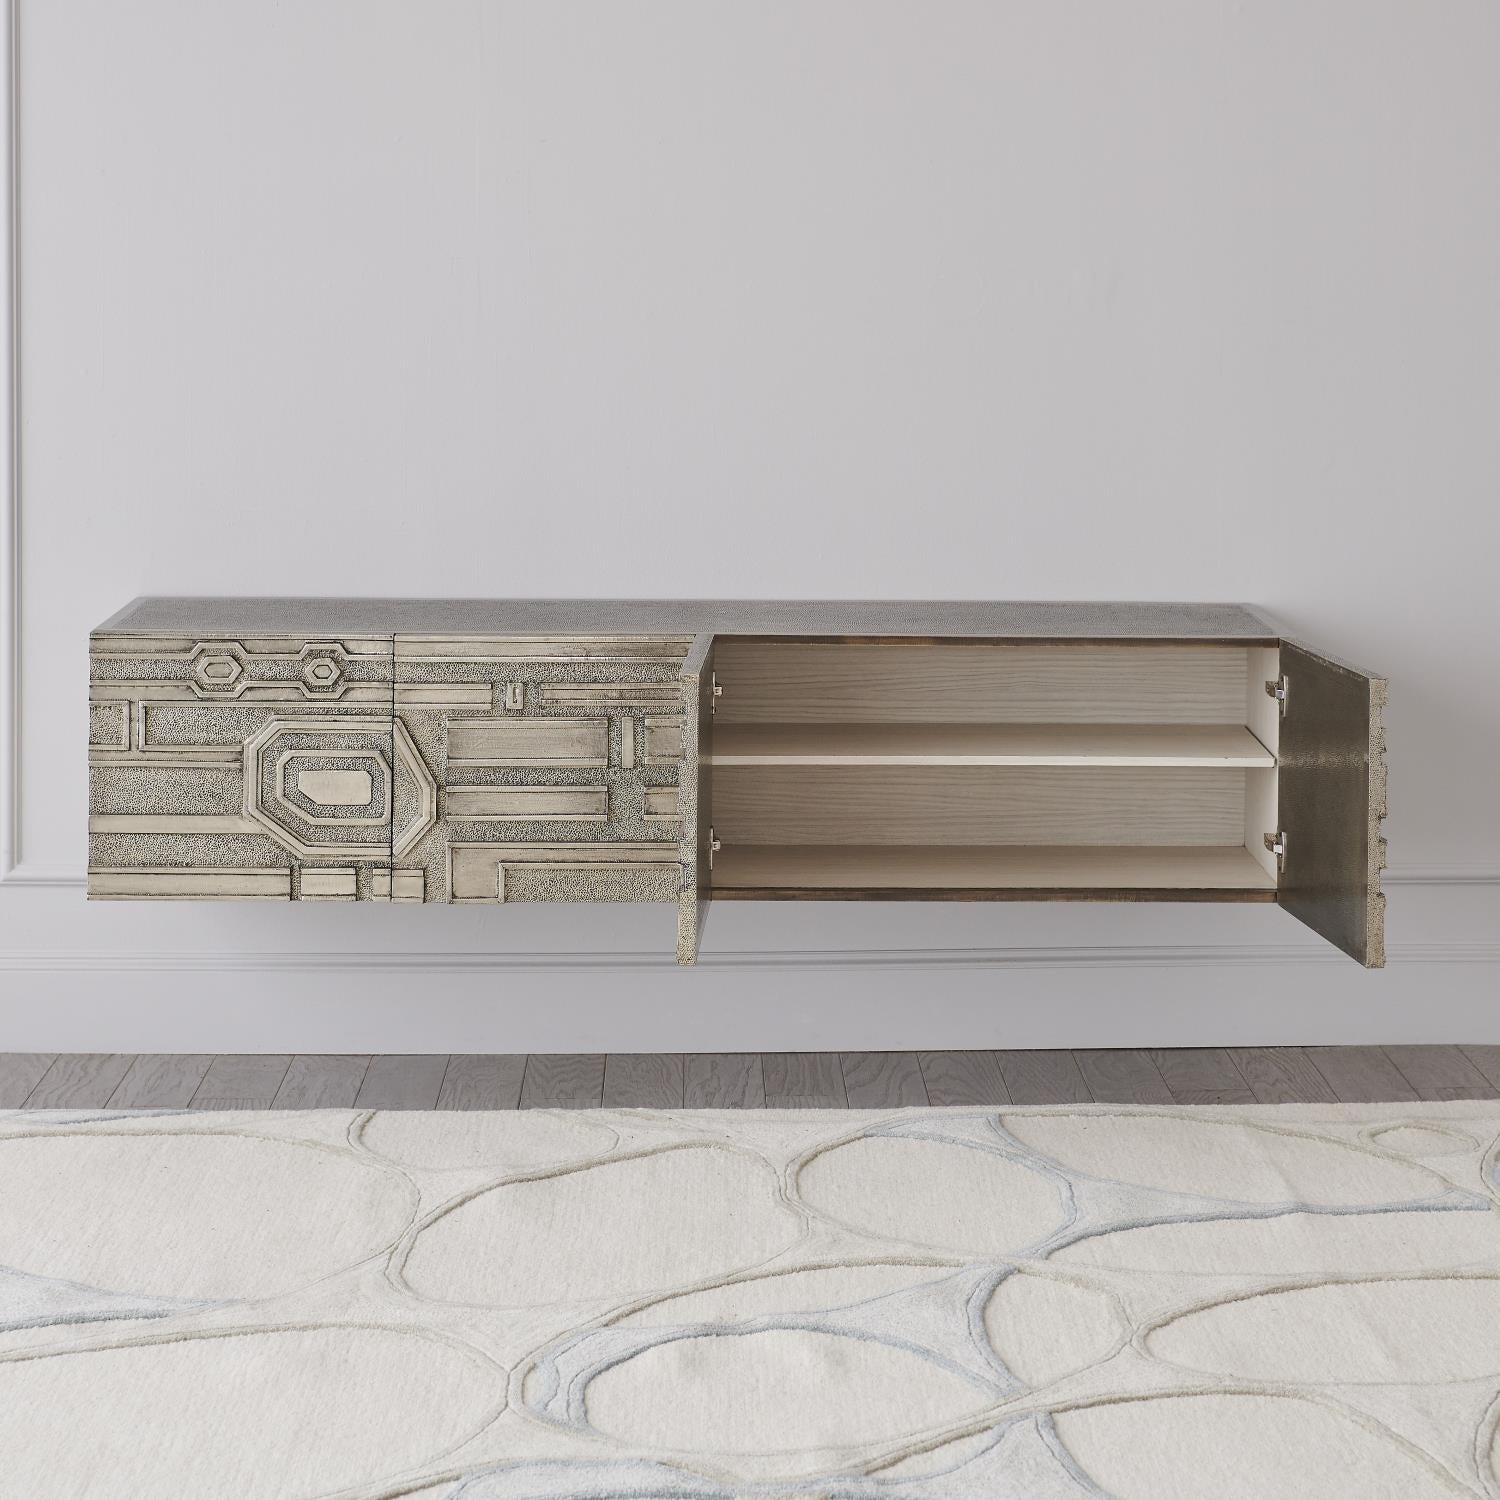 Abstract Block Cabinet - Grey - Grats Decor Interior Design & Build Inc.